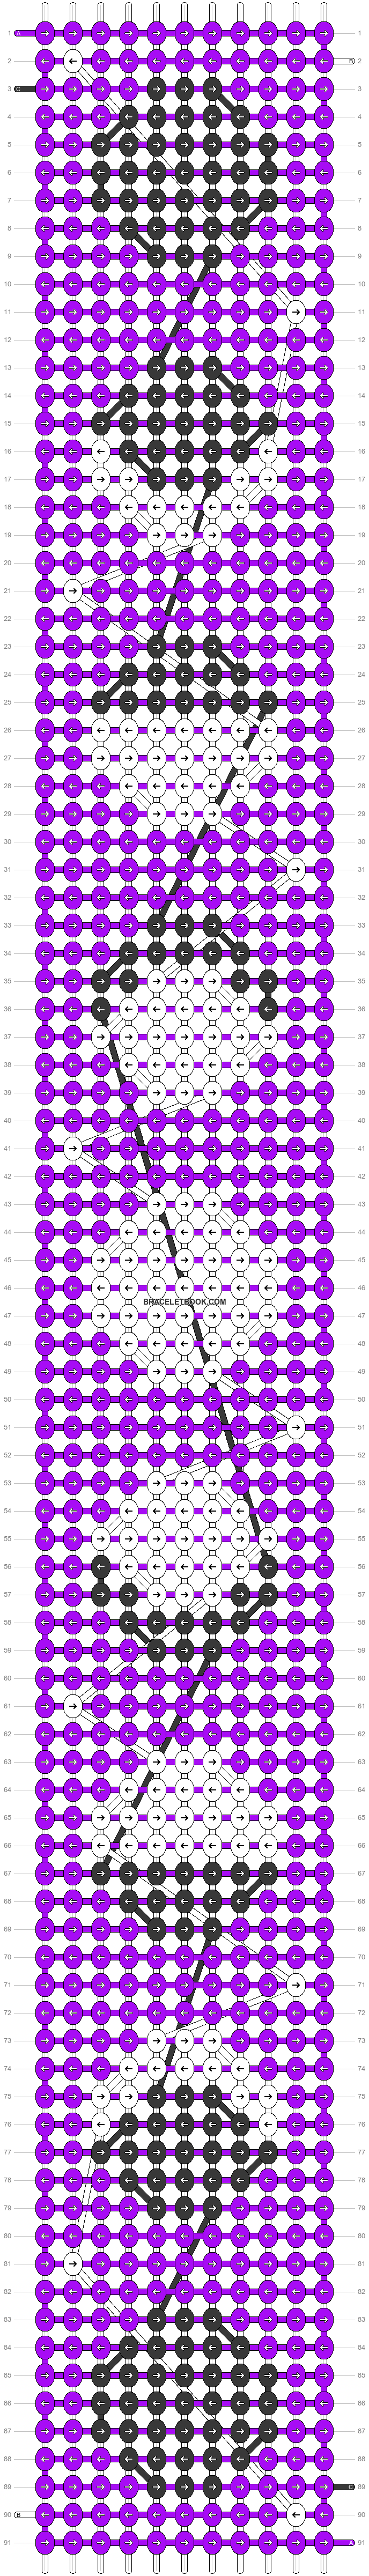 Alpha pattern #26521 variation #16745 pattern